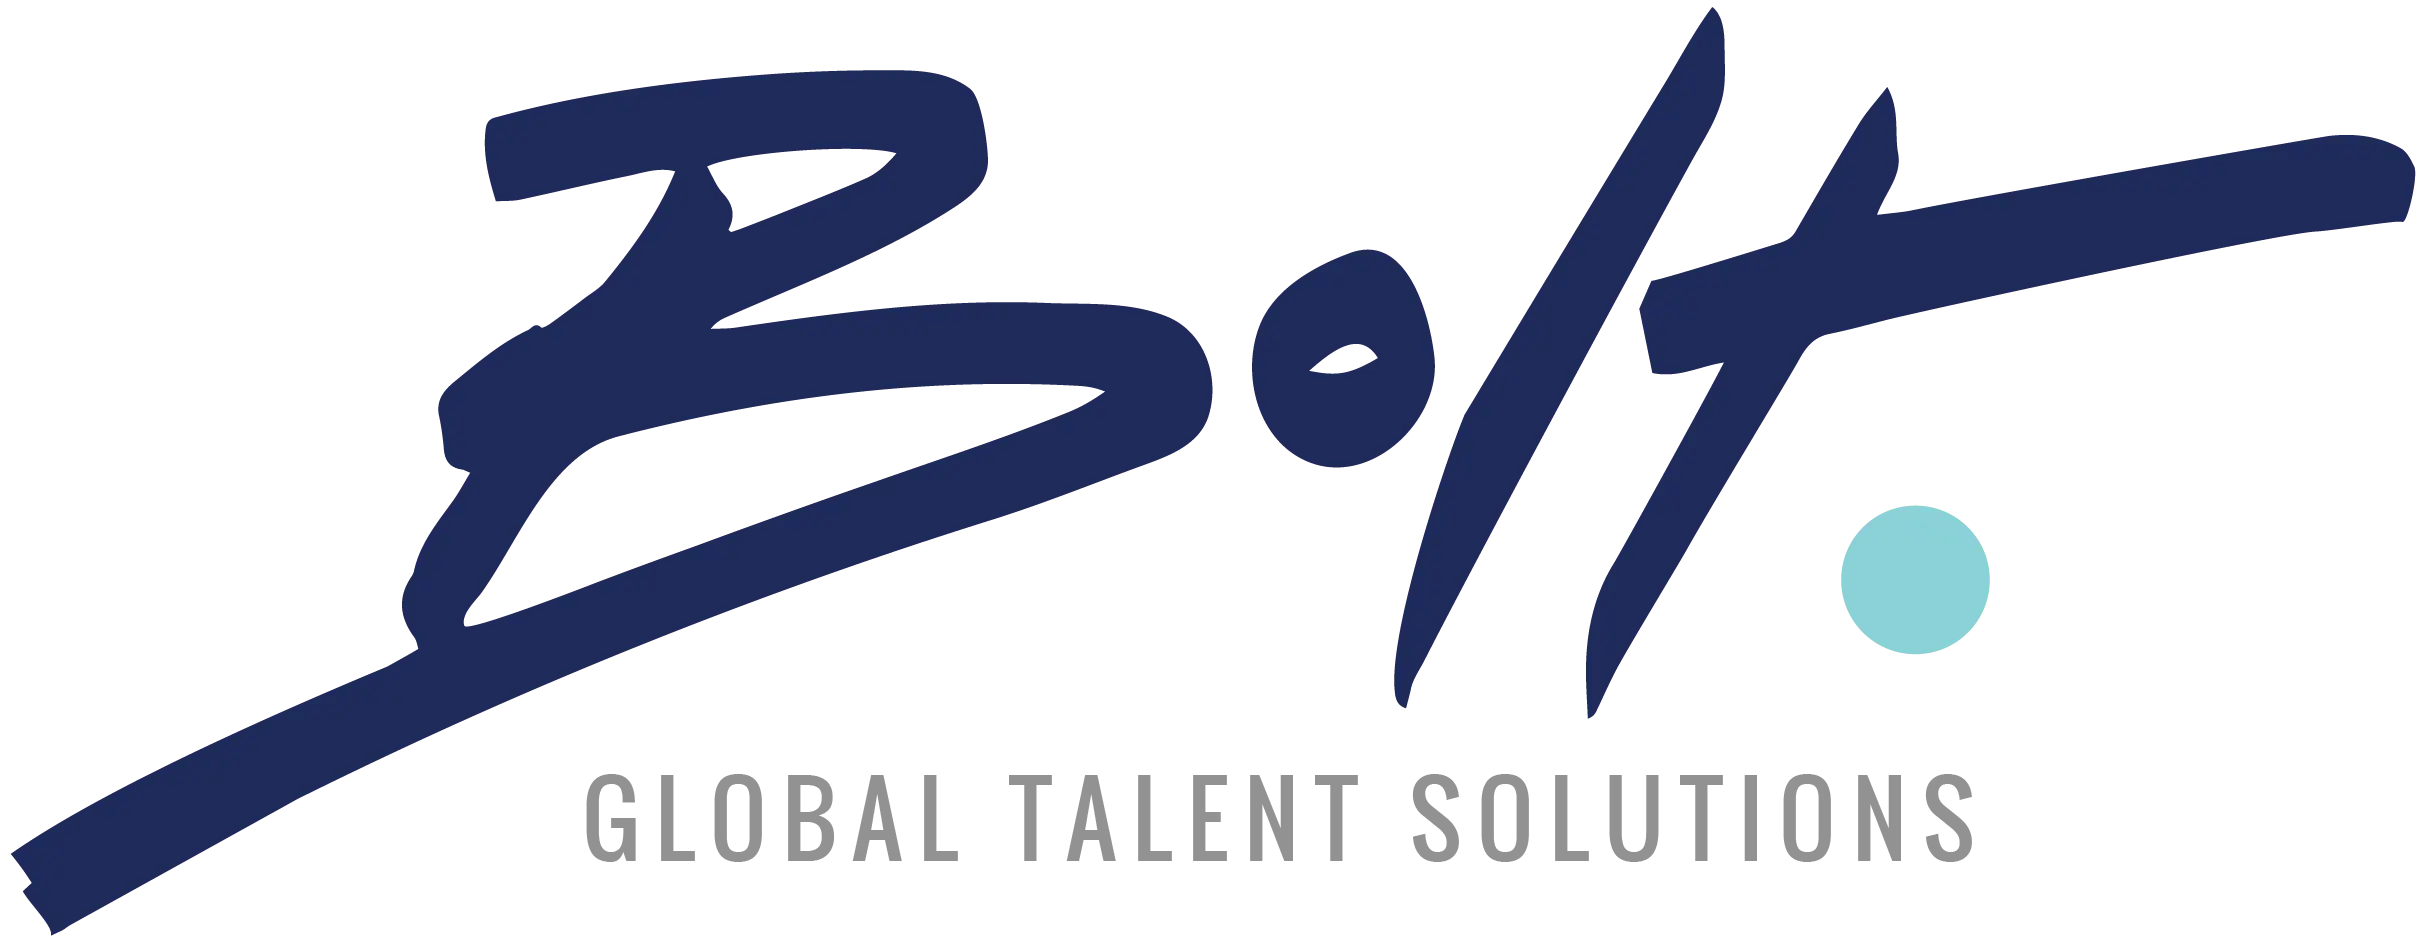 Bolt_Logo_Global_Talent-01-01.png